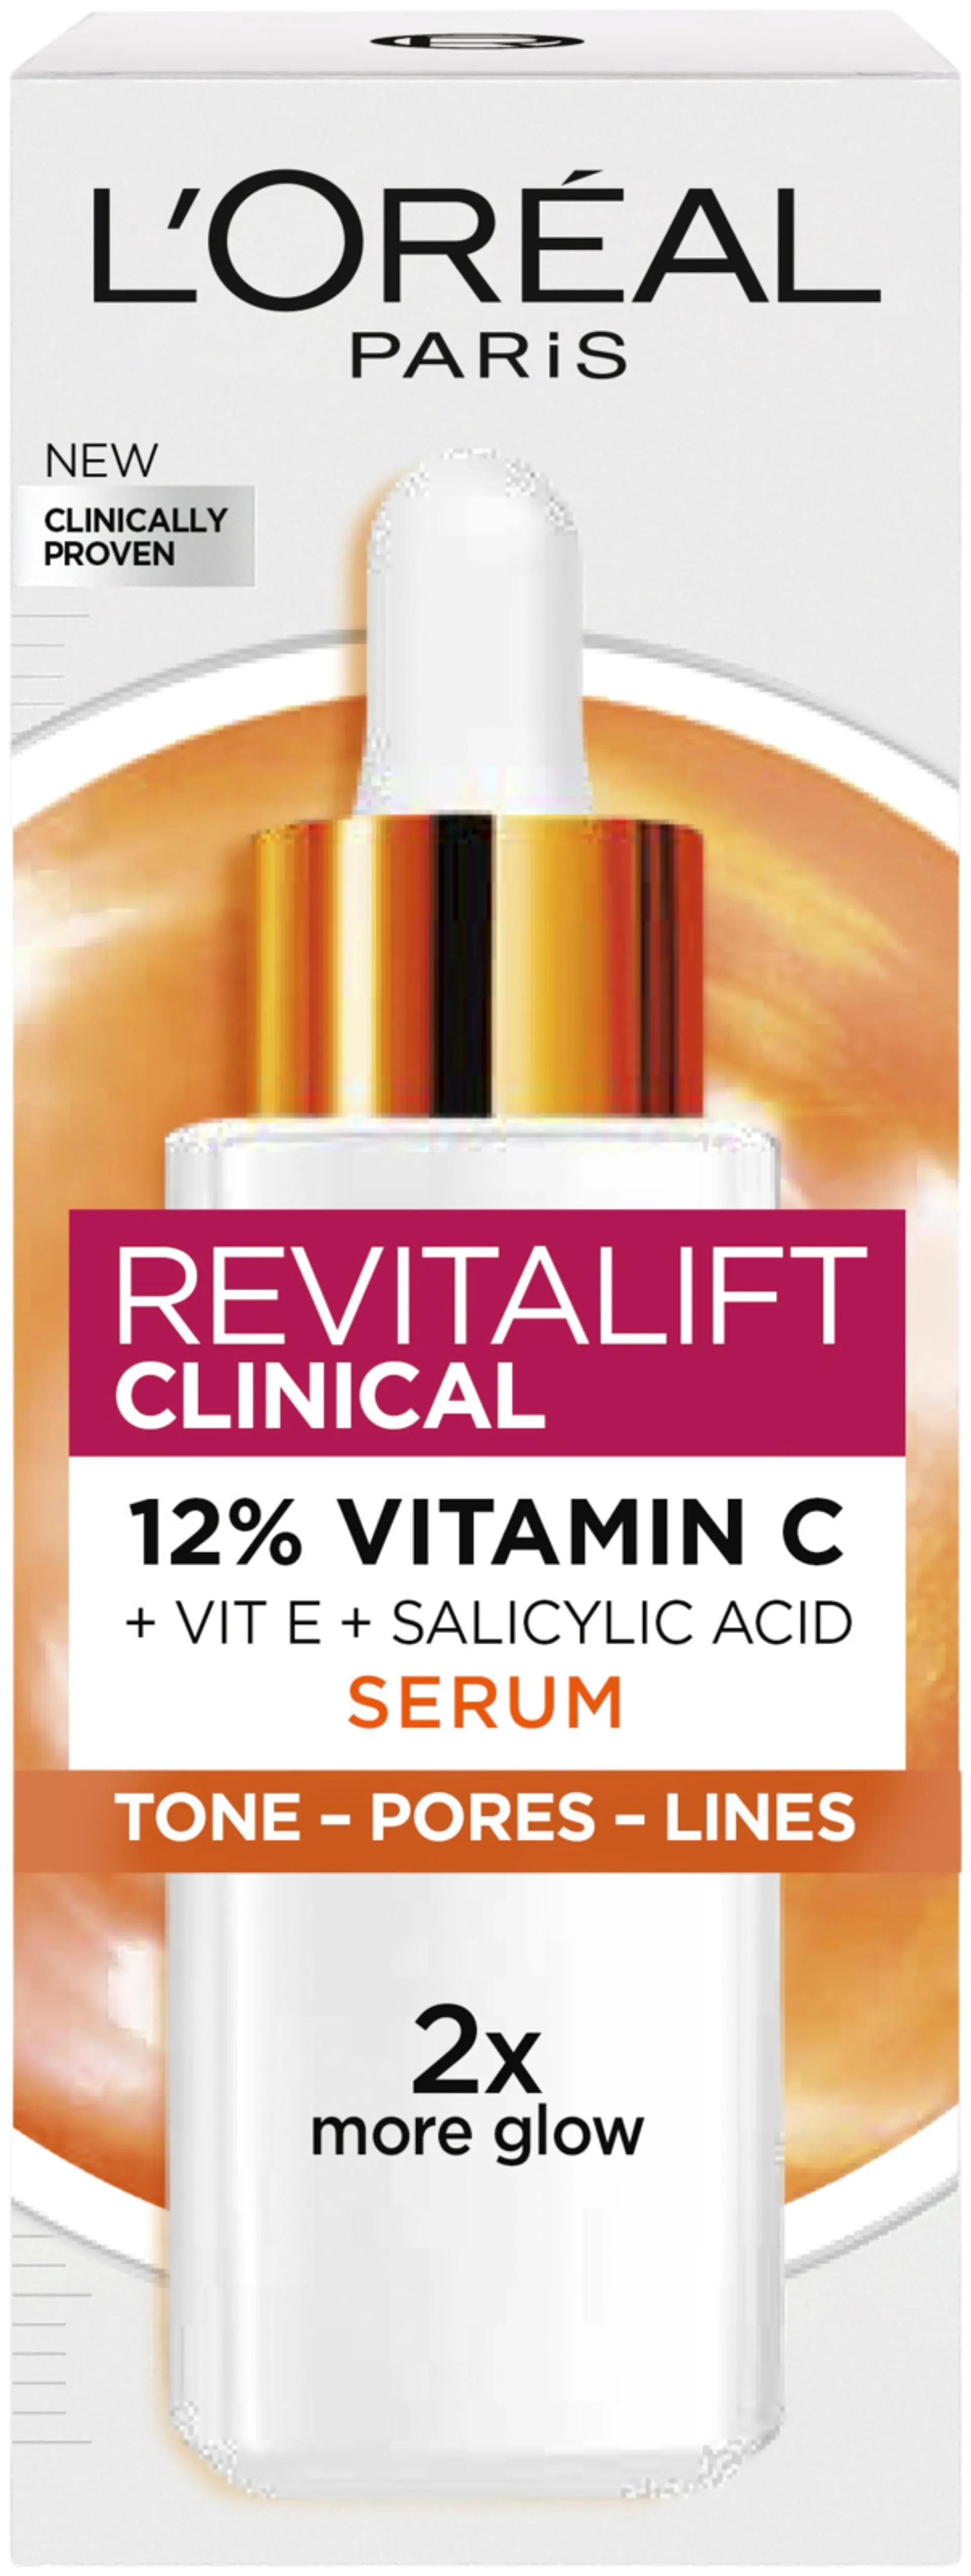 L'Oréal Paris Revitalift Clinical 12% Pure Vitamin C Serum seerumi normaalille iholle 30ml - 2